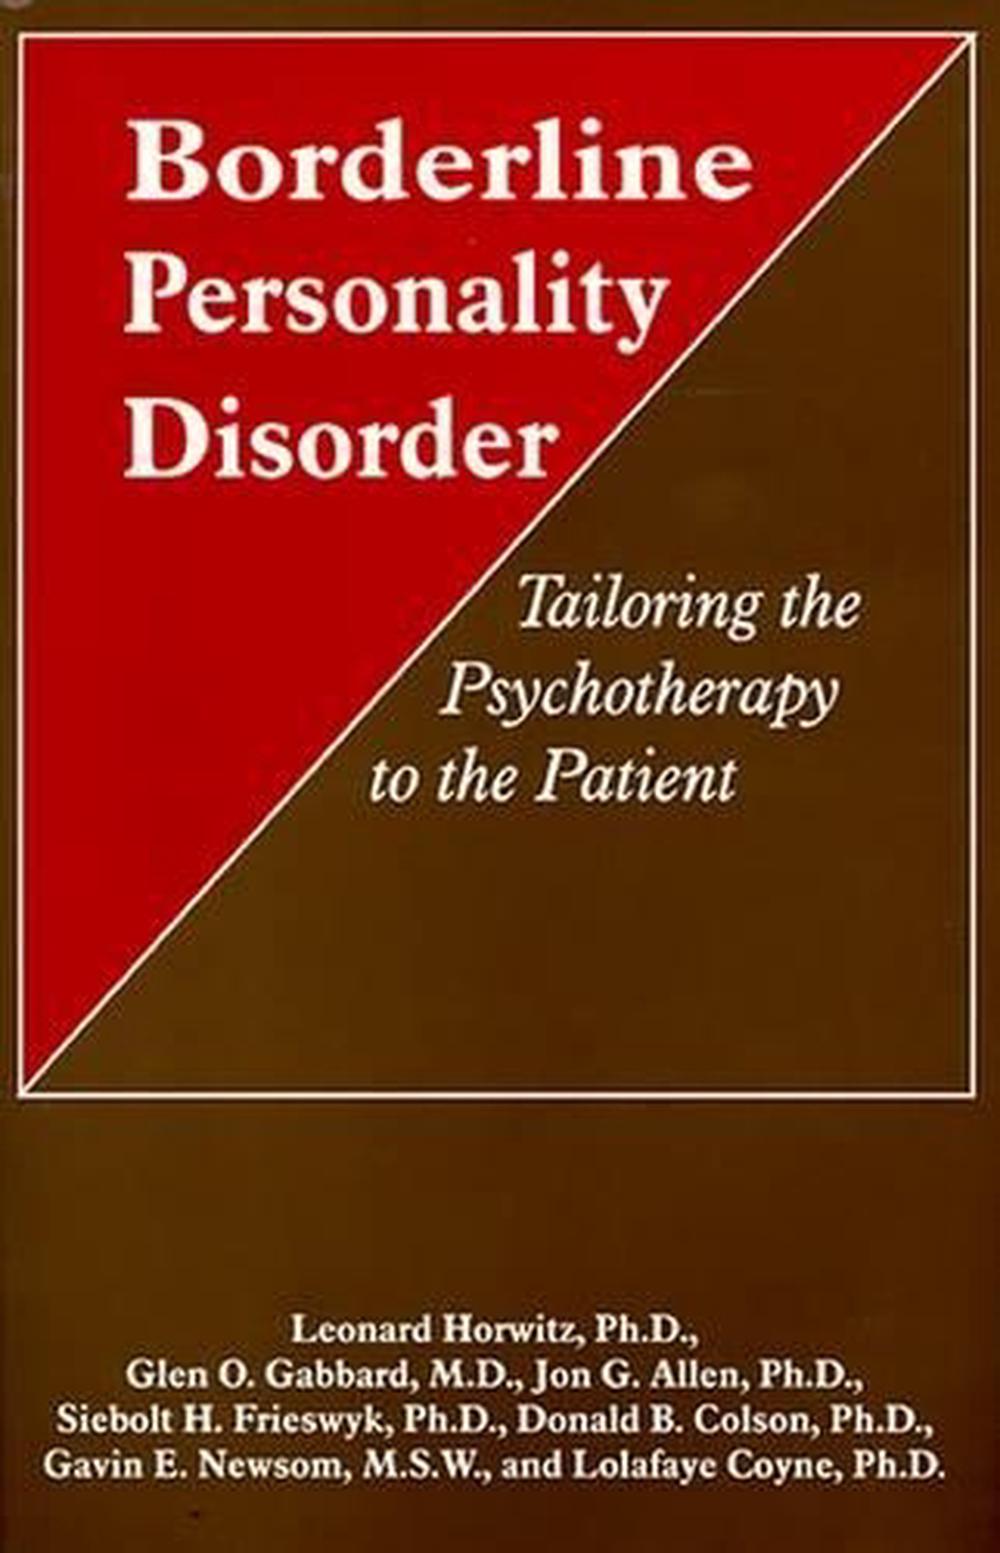 dissertation on borderline personality disorder